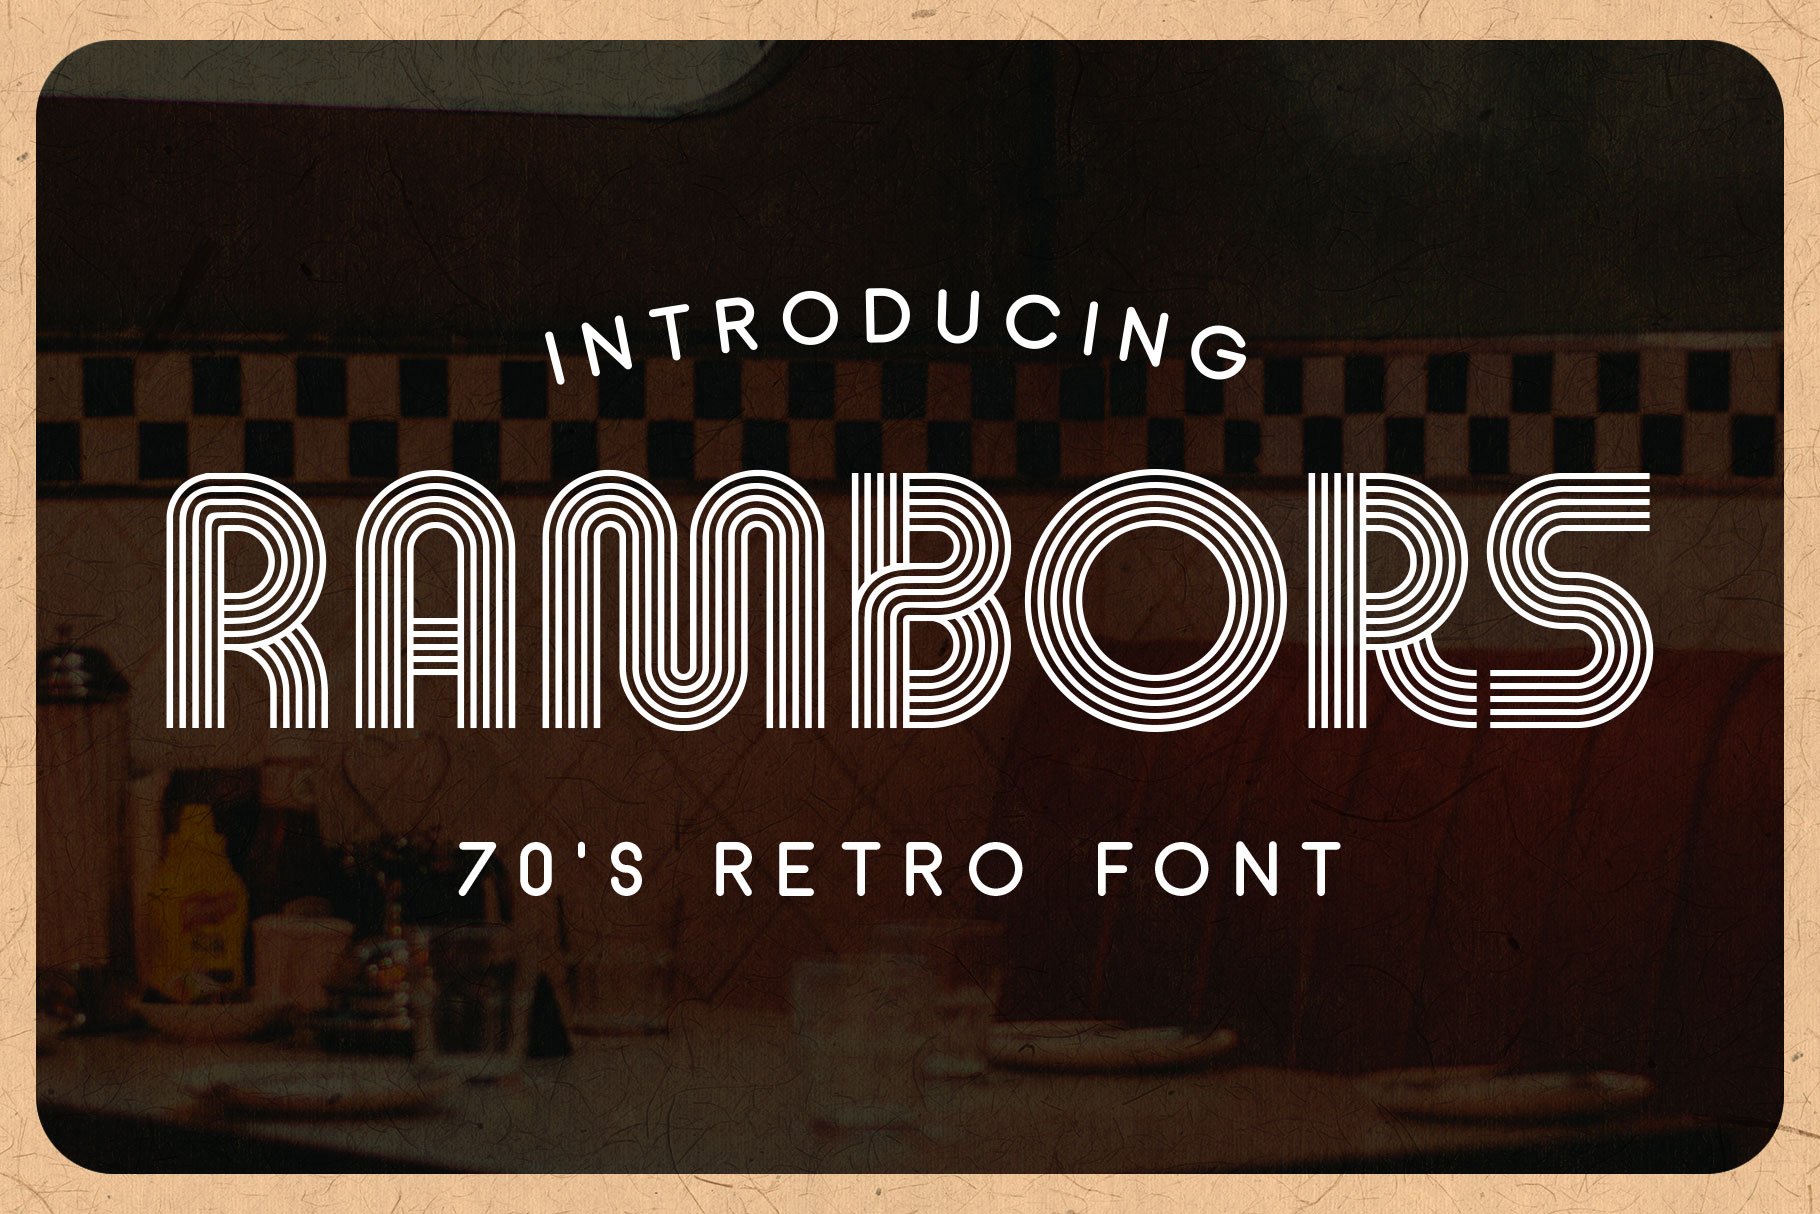 Rambors - Retro Font cover image.